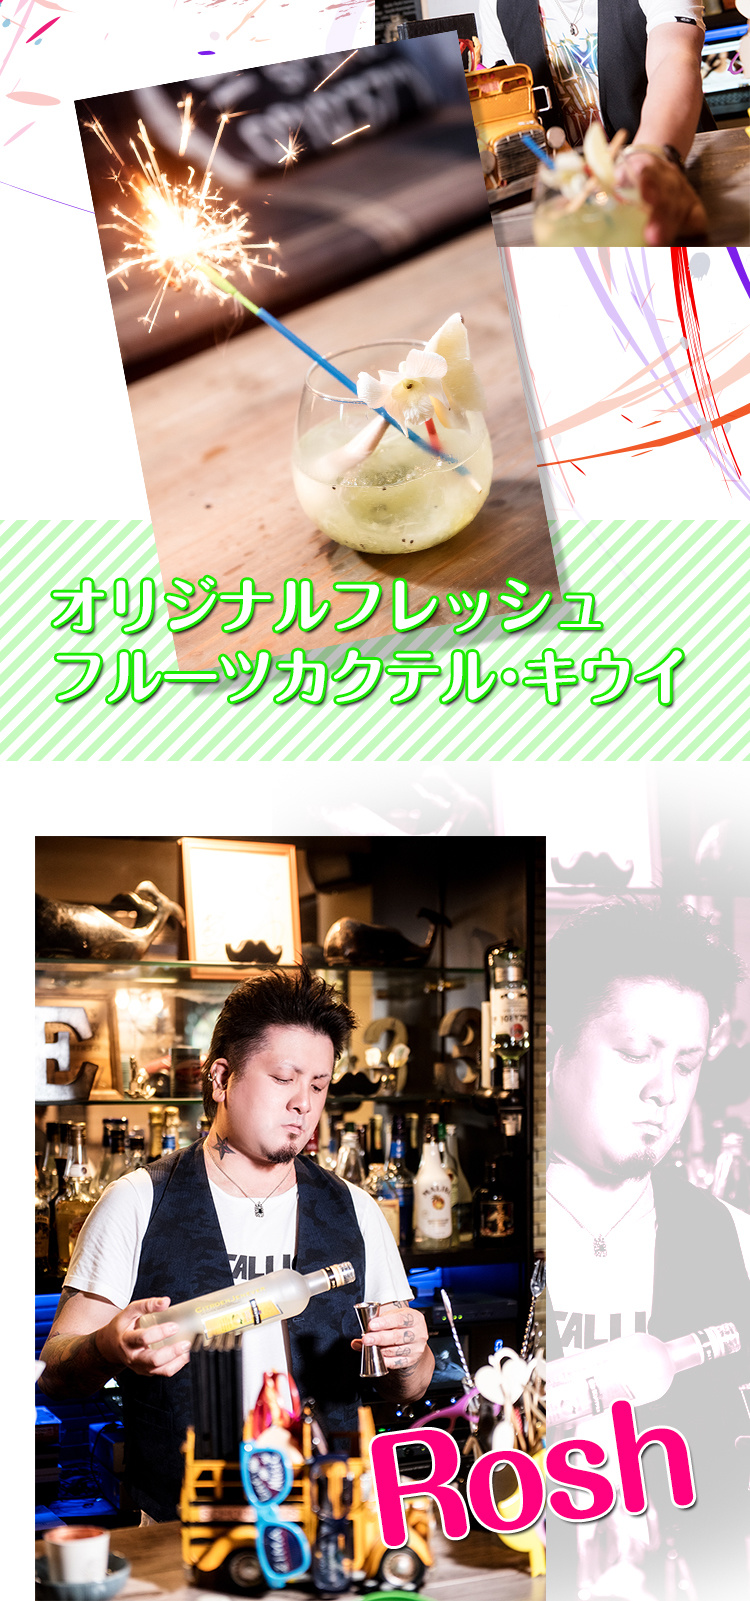 大阪Bar Kurohige